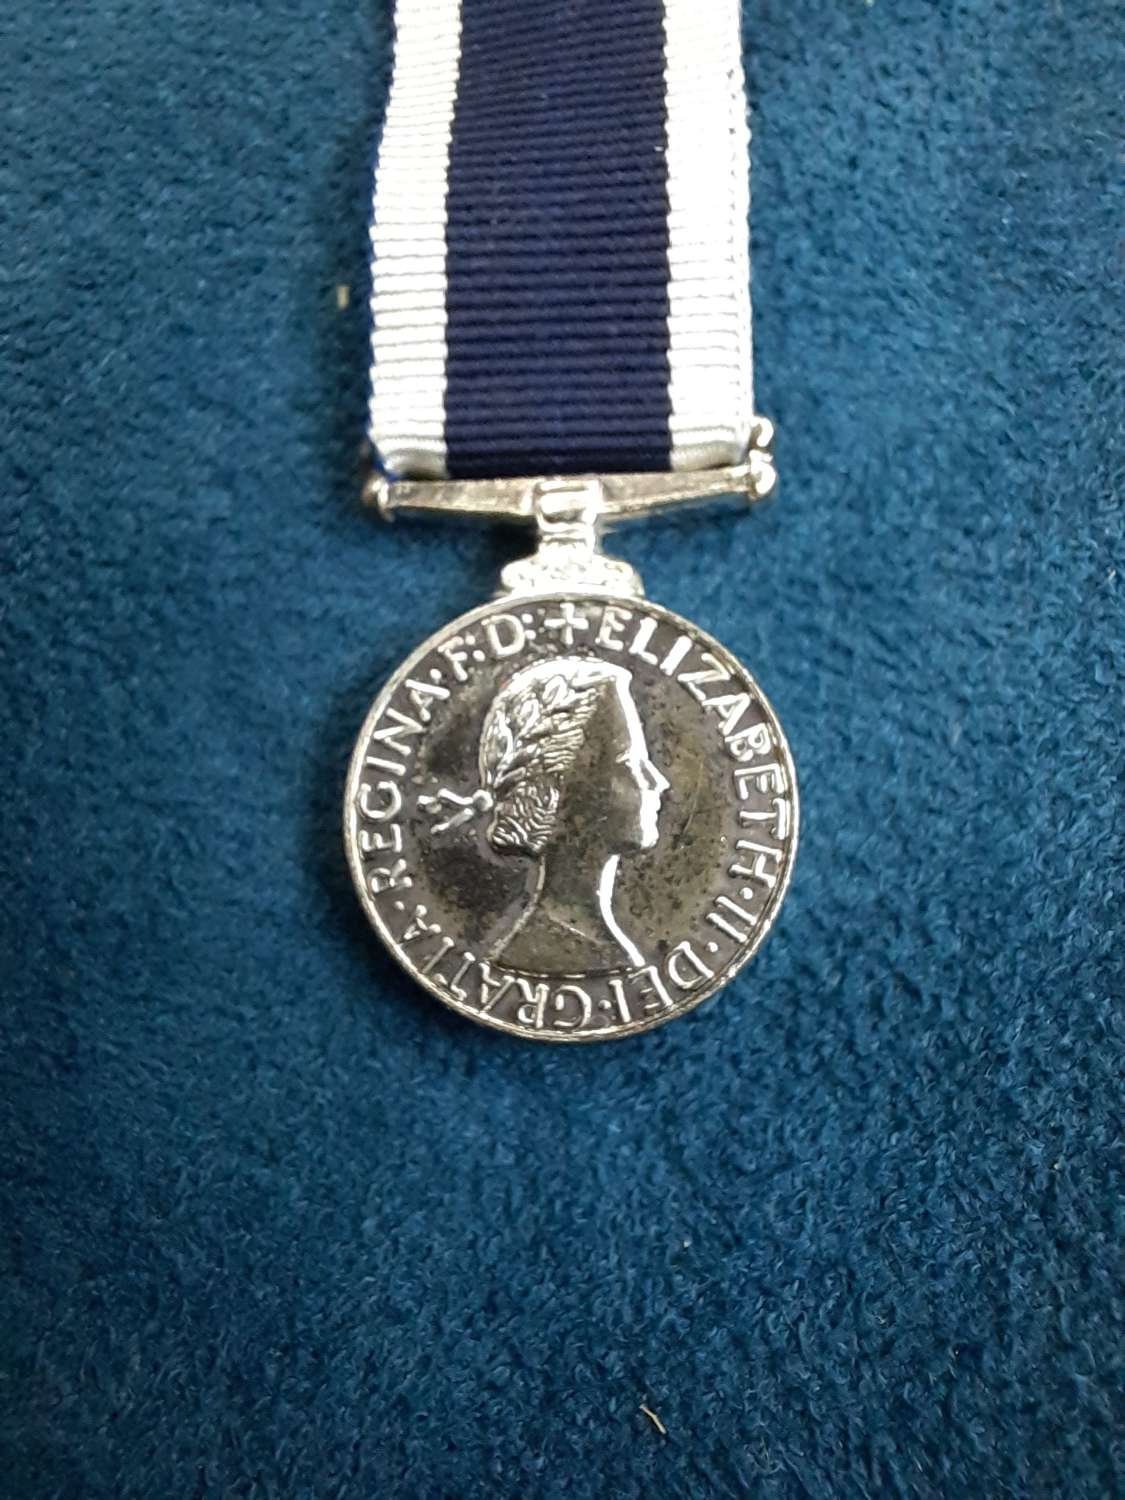 Miniature Royal Navy Long Service Good Conduct Medal